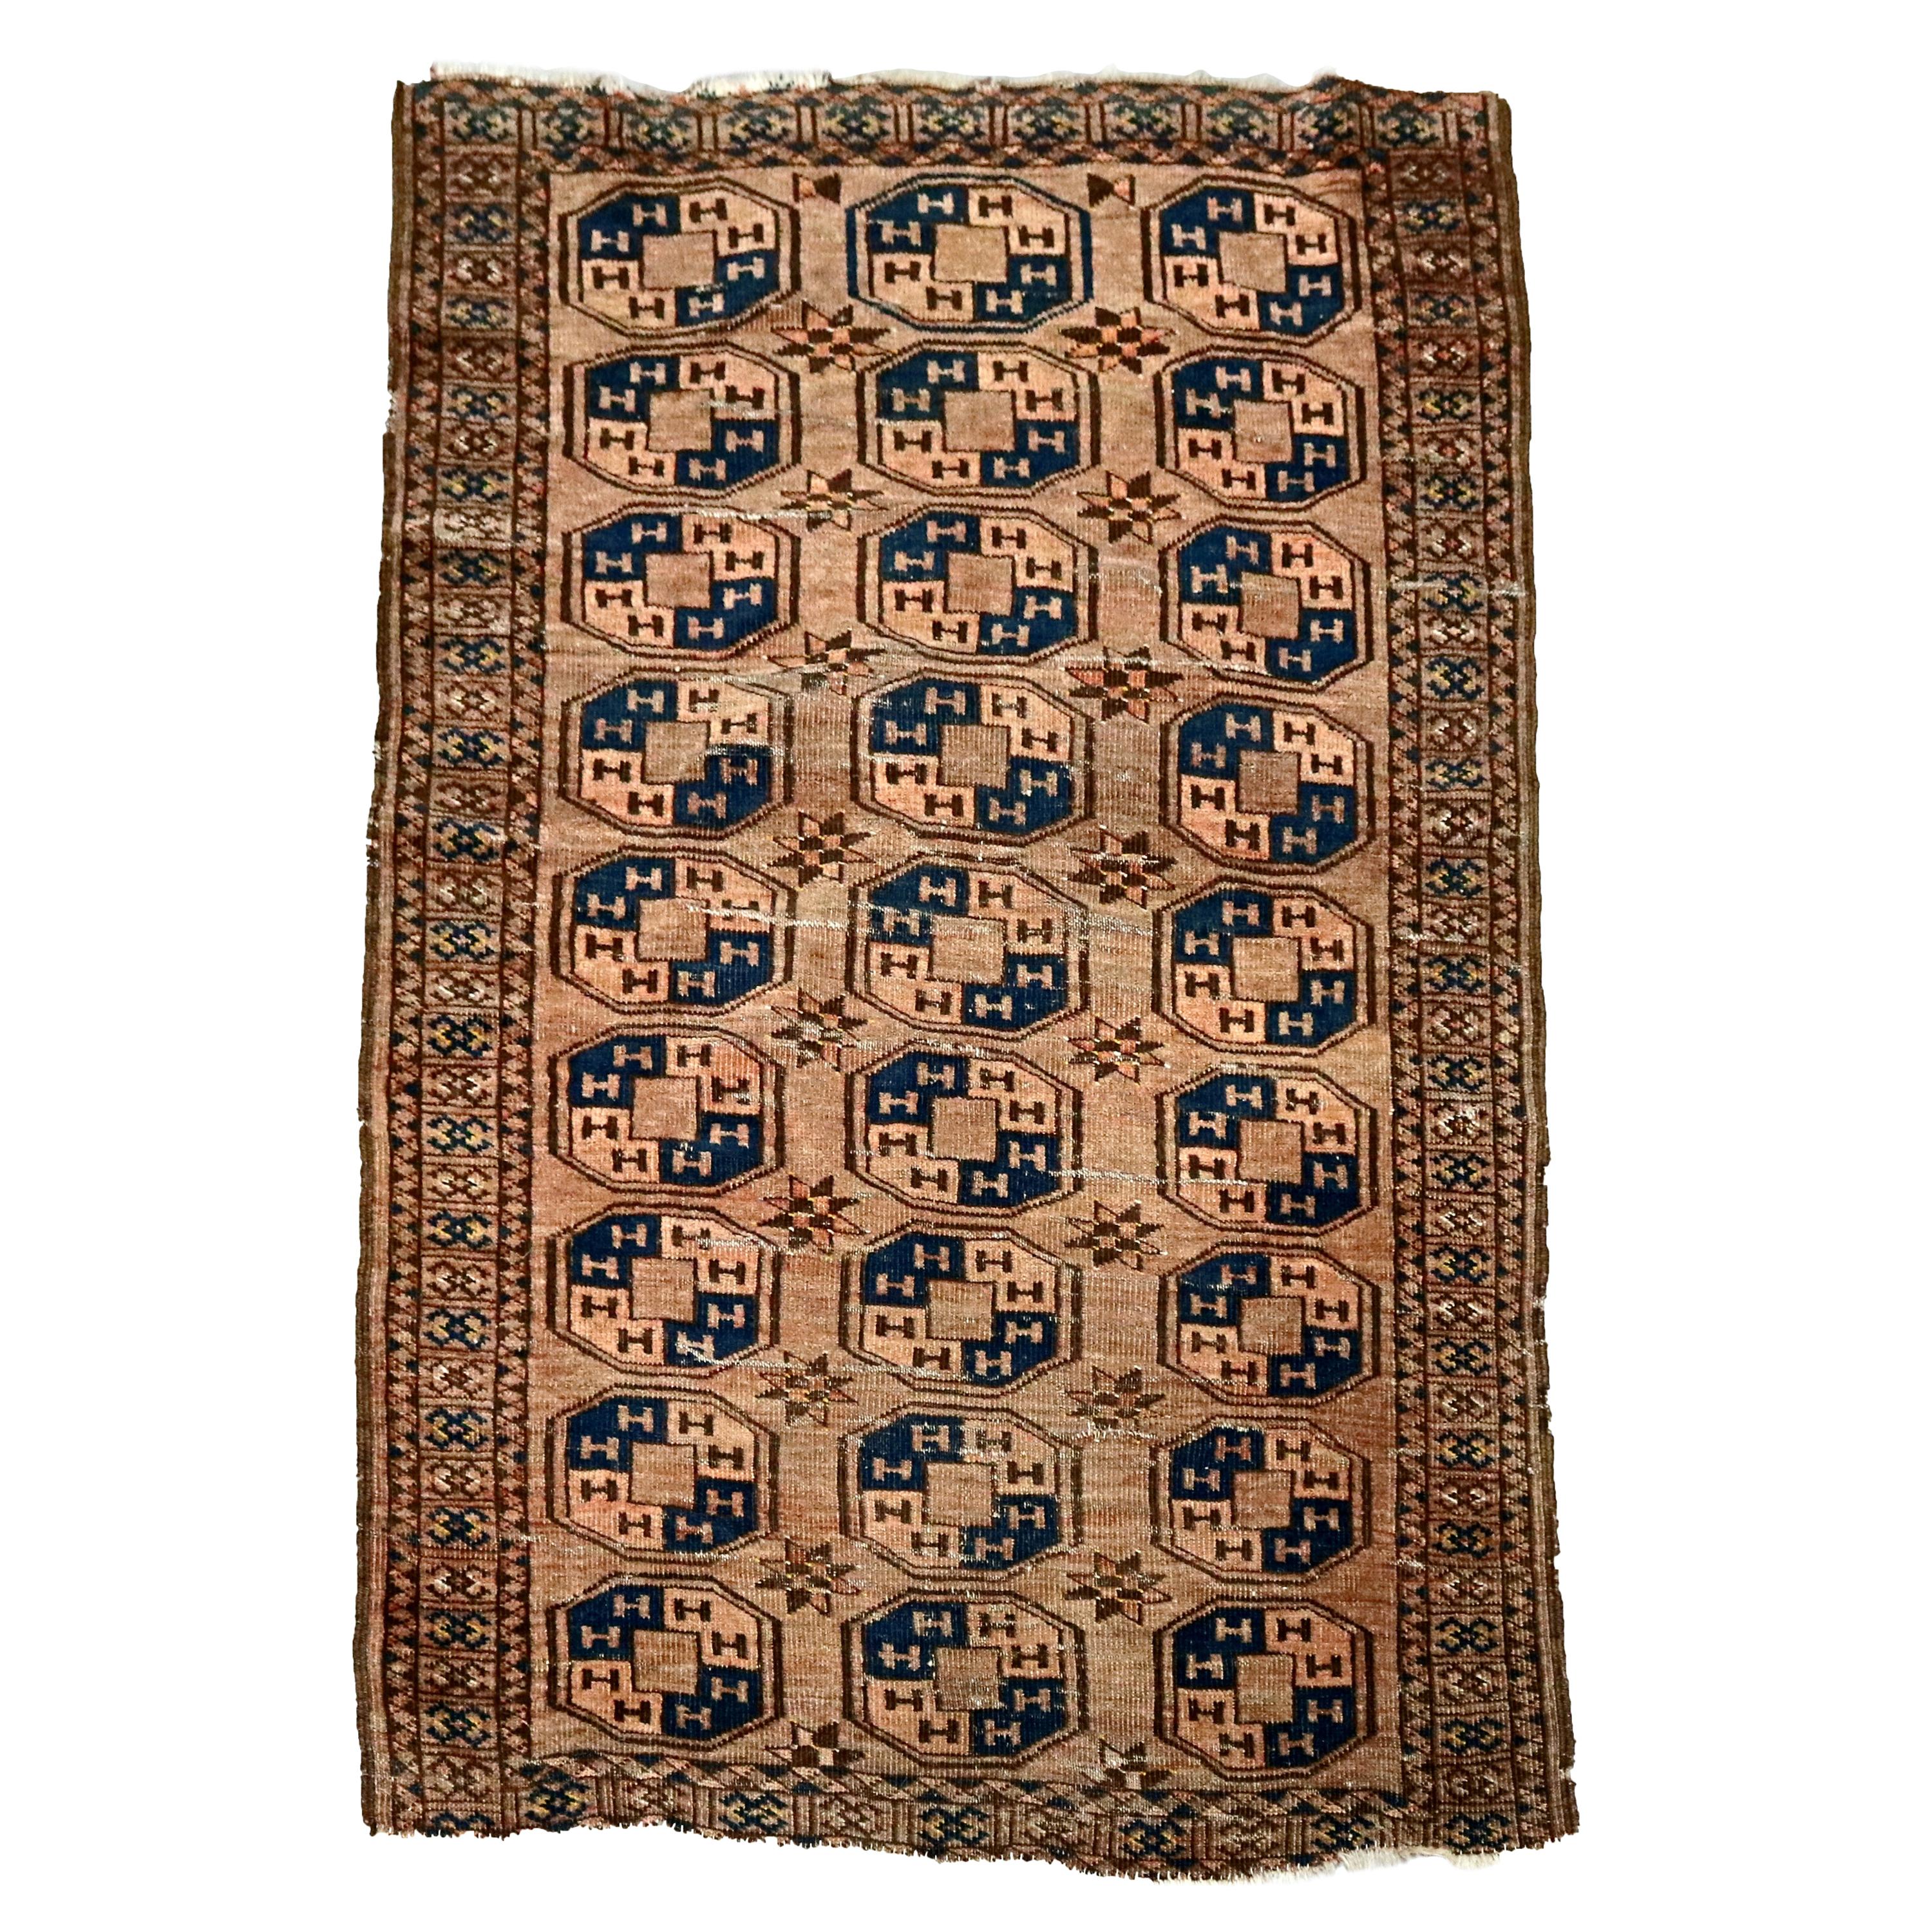 Antique Persian Bokhara Hand Knotted Nomadic Tribal Rug, circa 1920